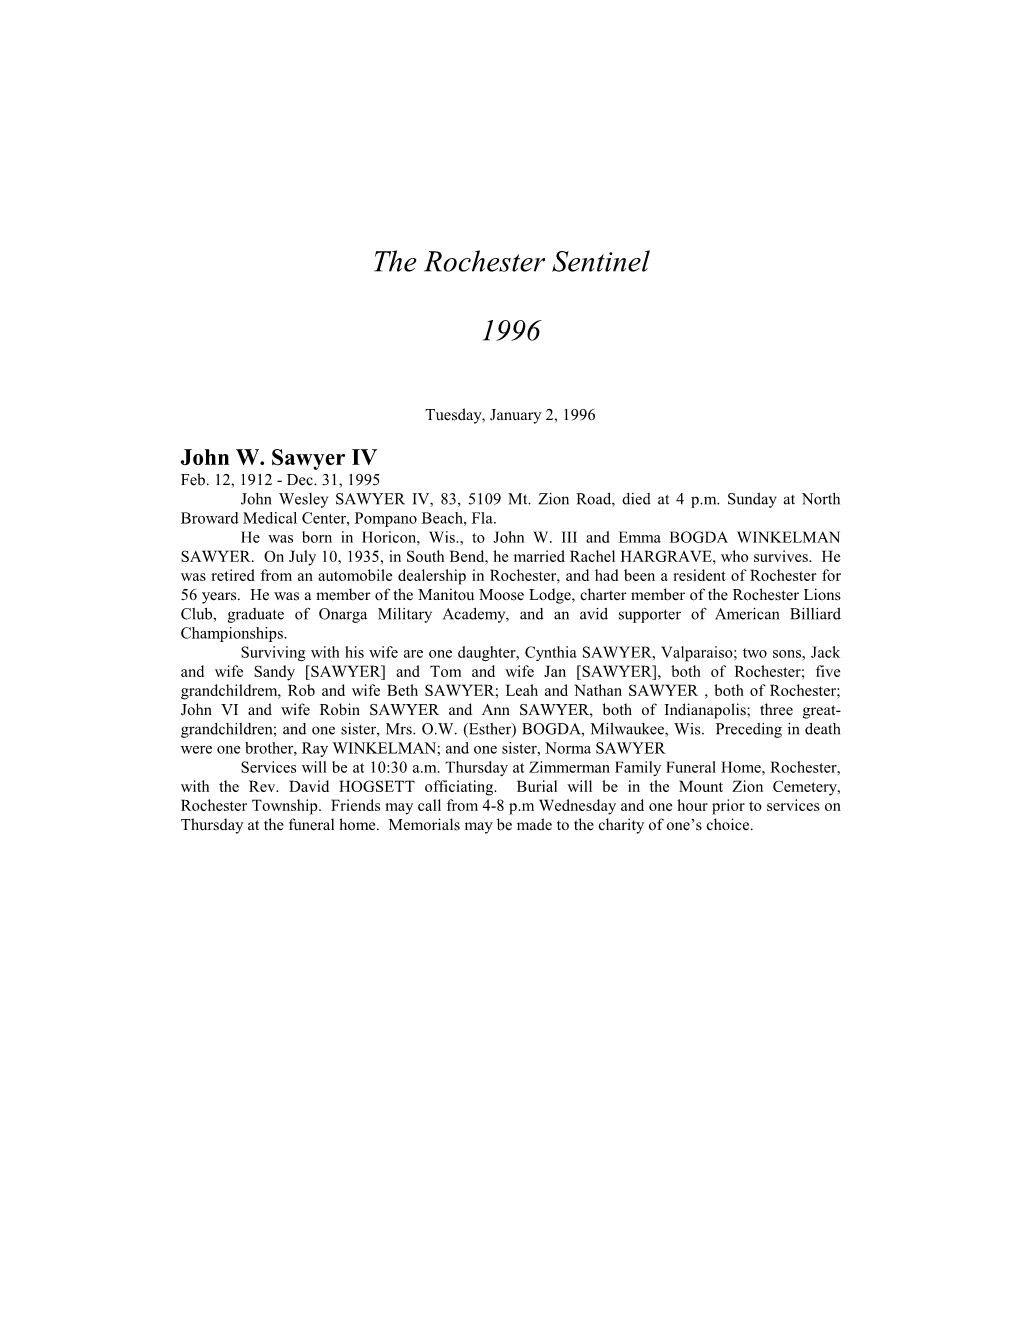 The Rochester Sentinel 1996